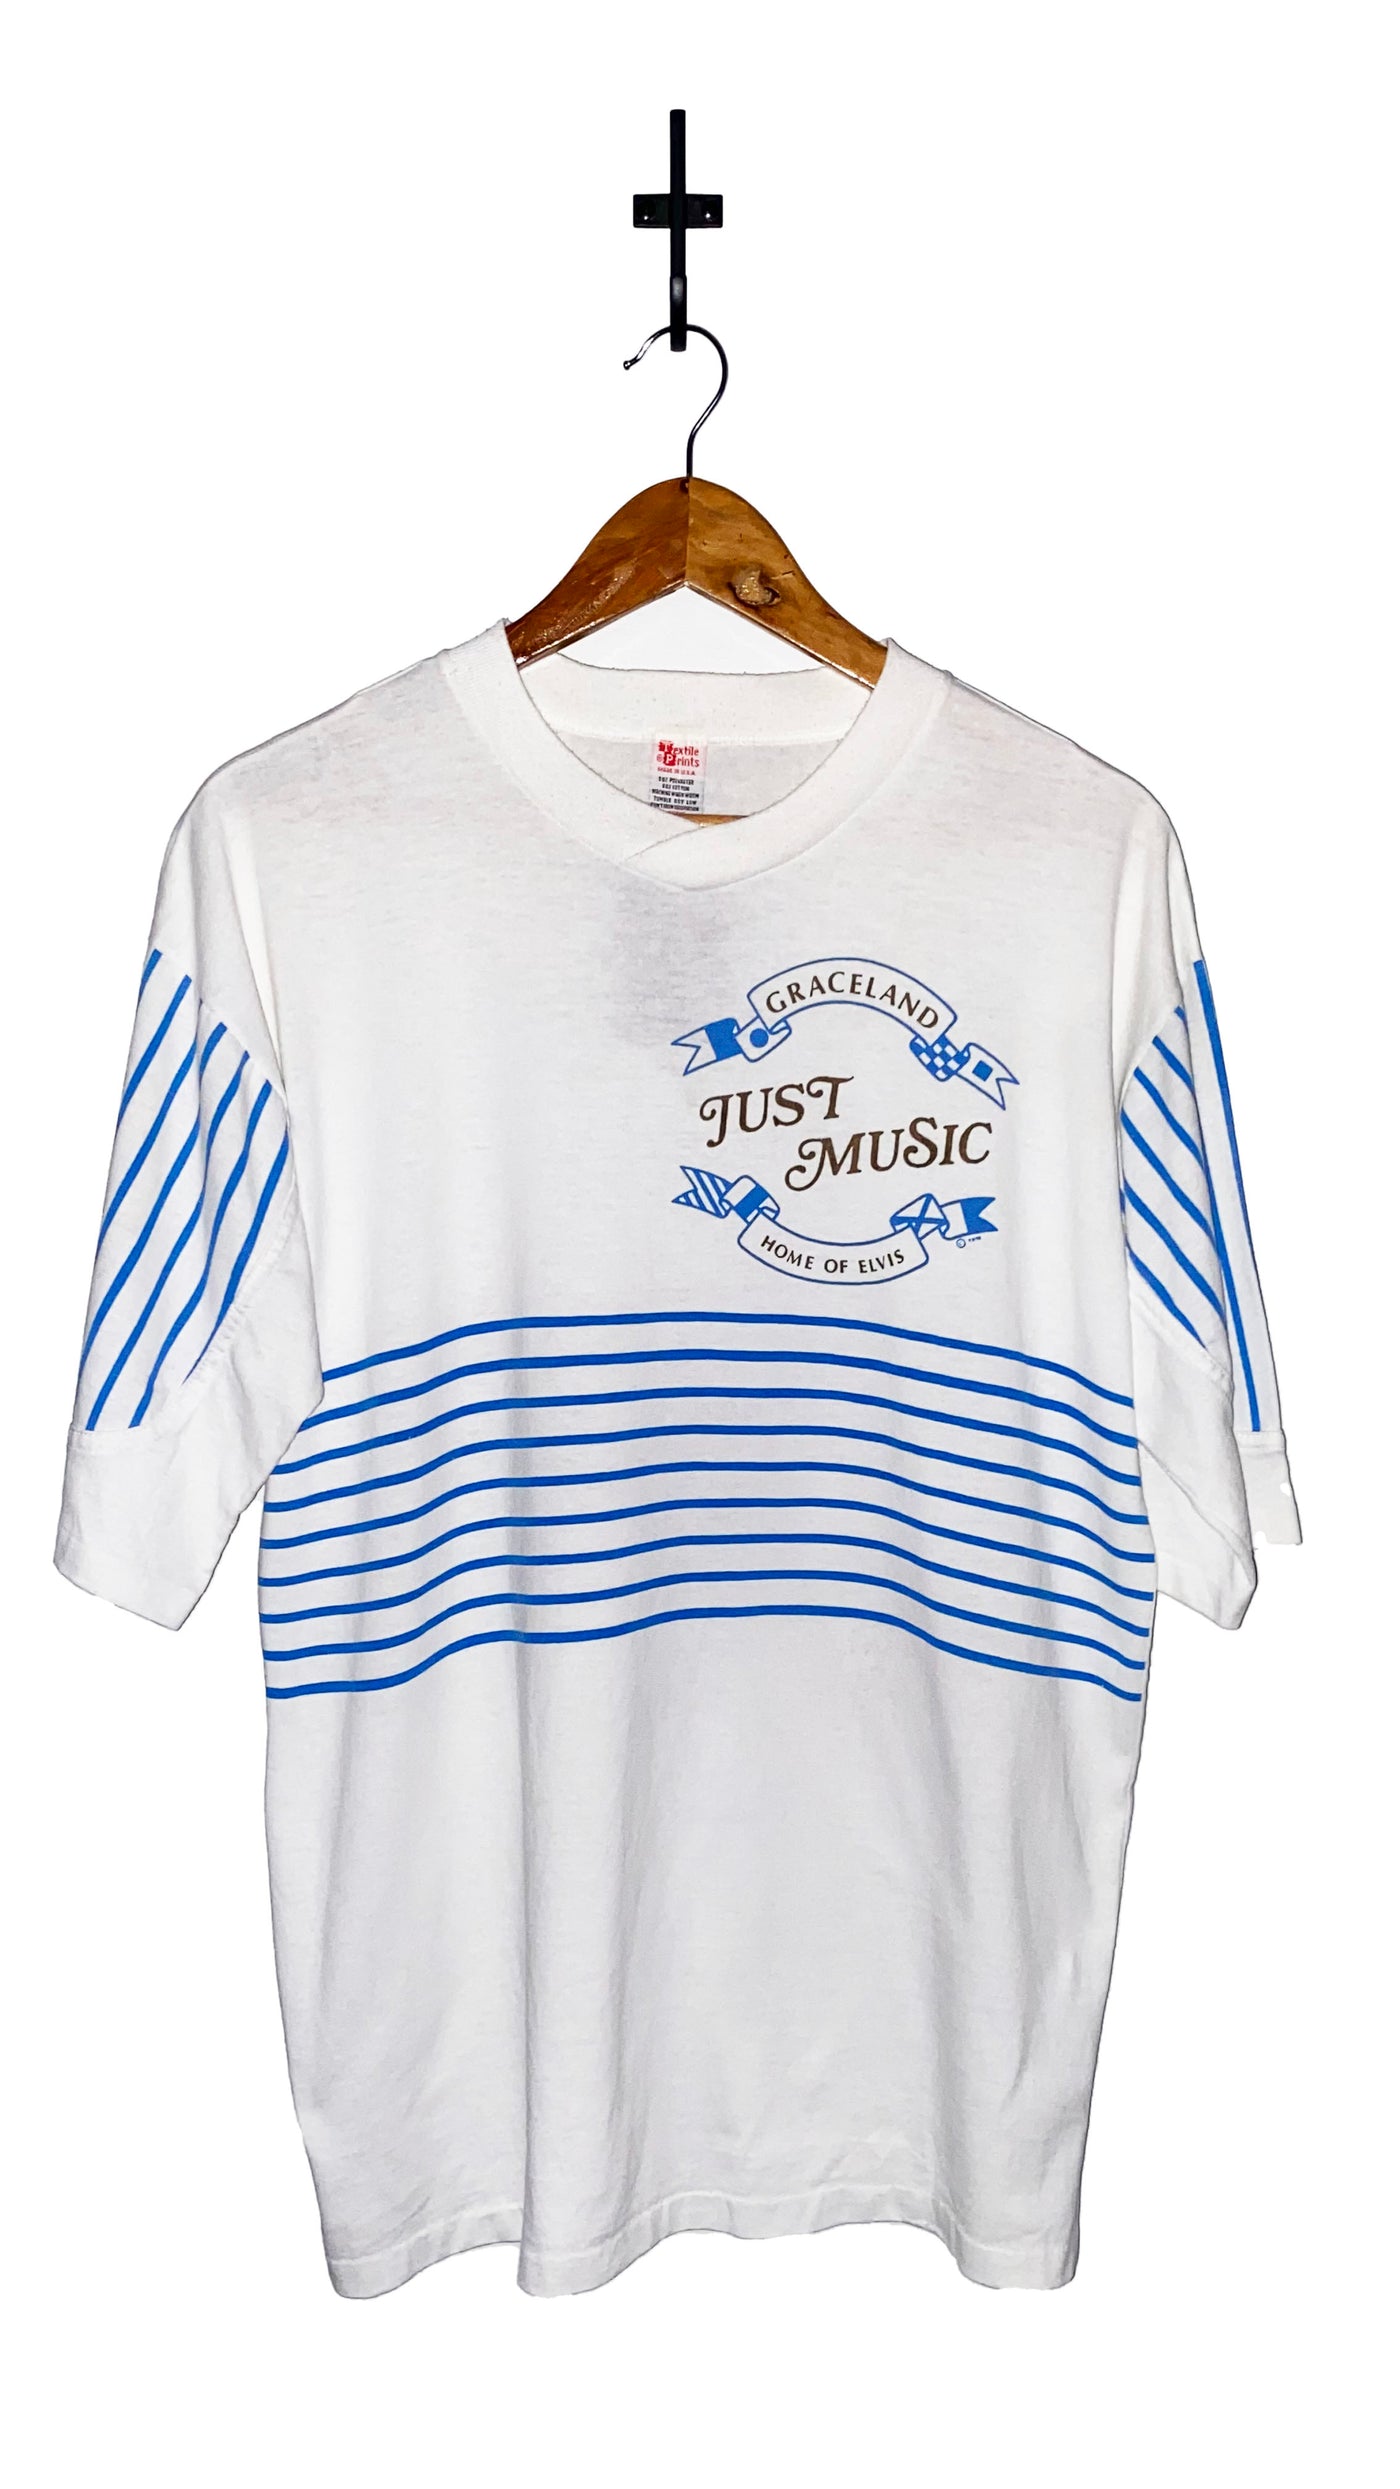 Vintage Graceland ‘Just Music’ T-Shirt